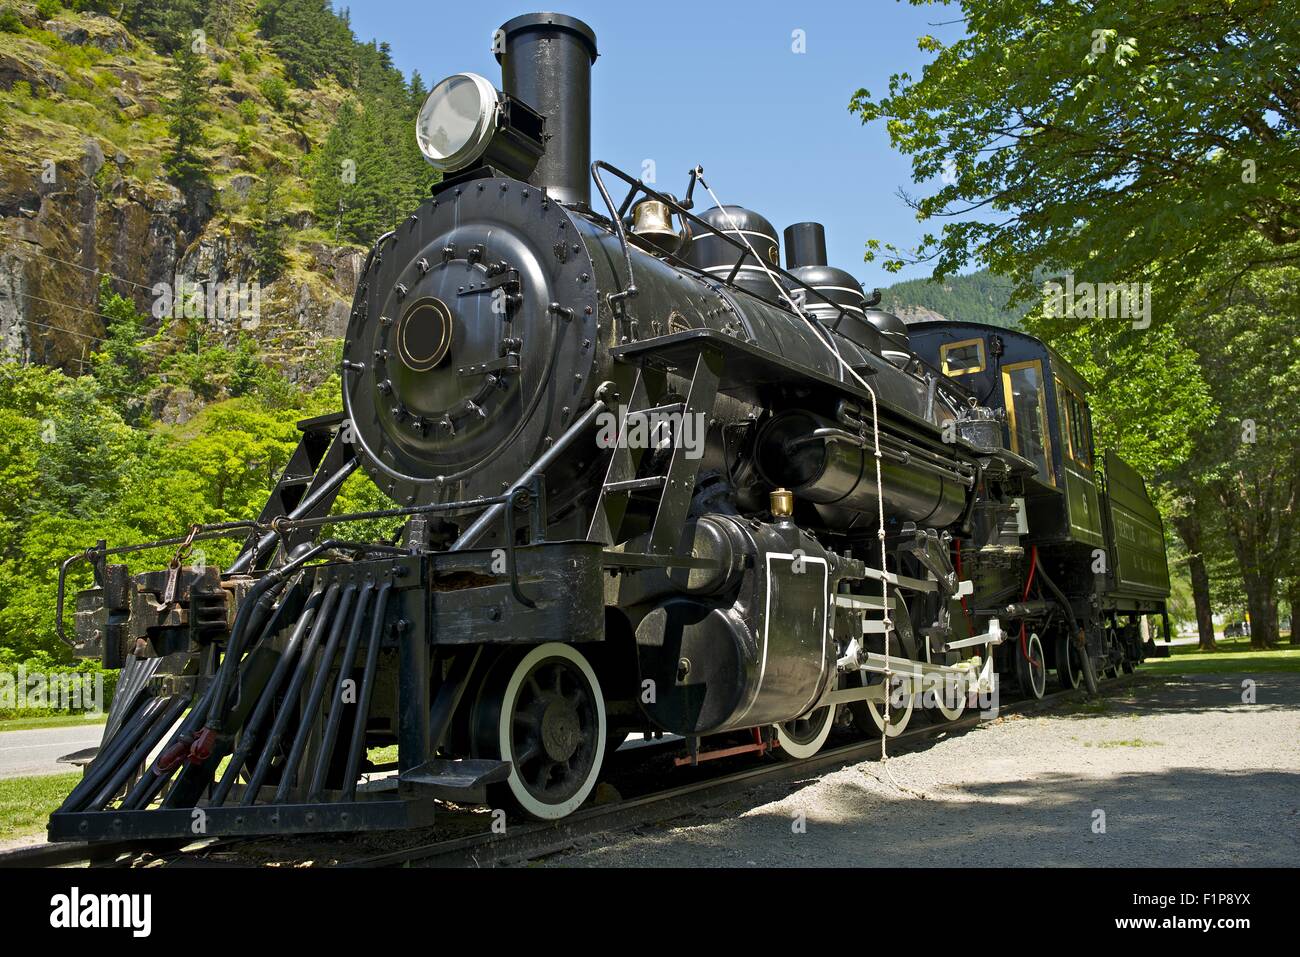 Alte Western Dampflok - historische Eisenbahn Lokomotive Exposition. US-Bundesstaat Washington, USA. Transport-Foto-Sammlung Stockfoto